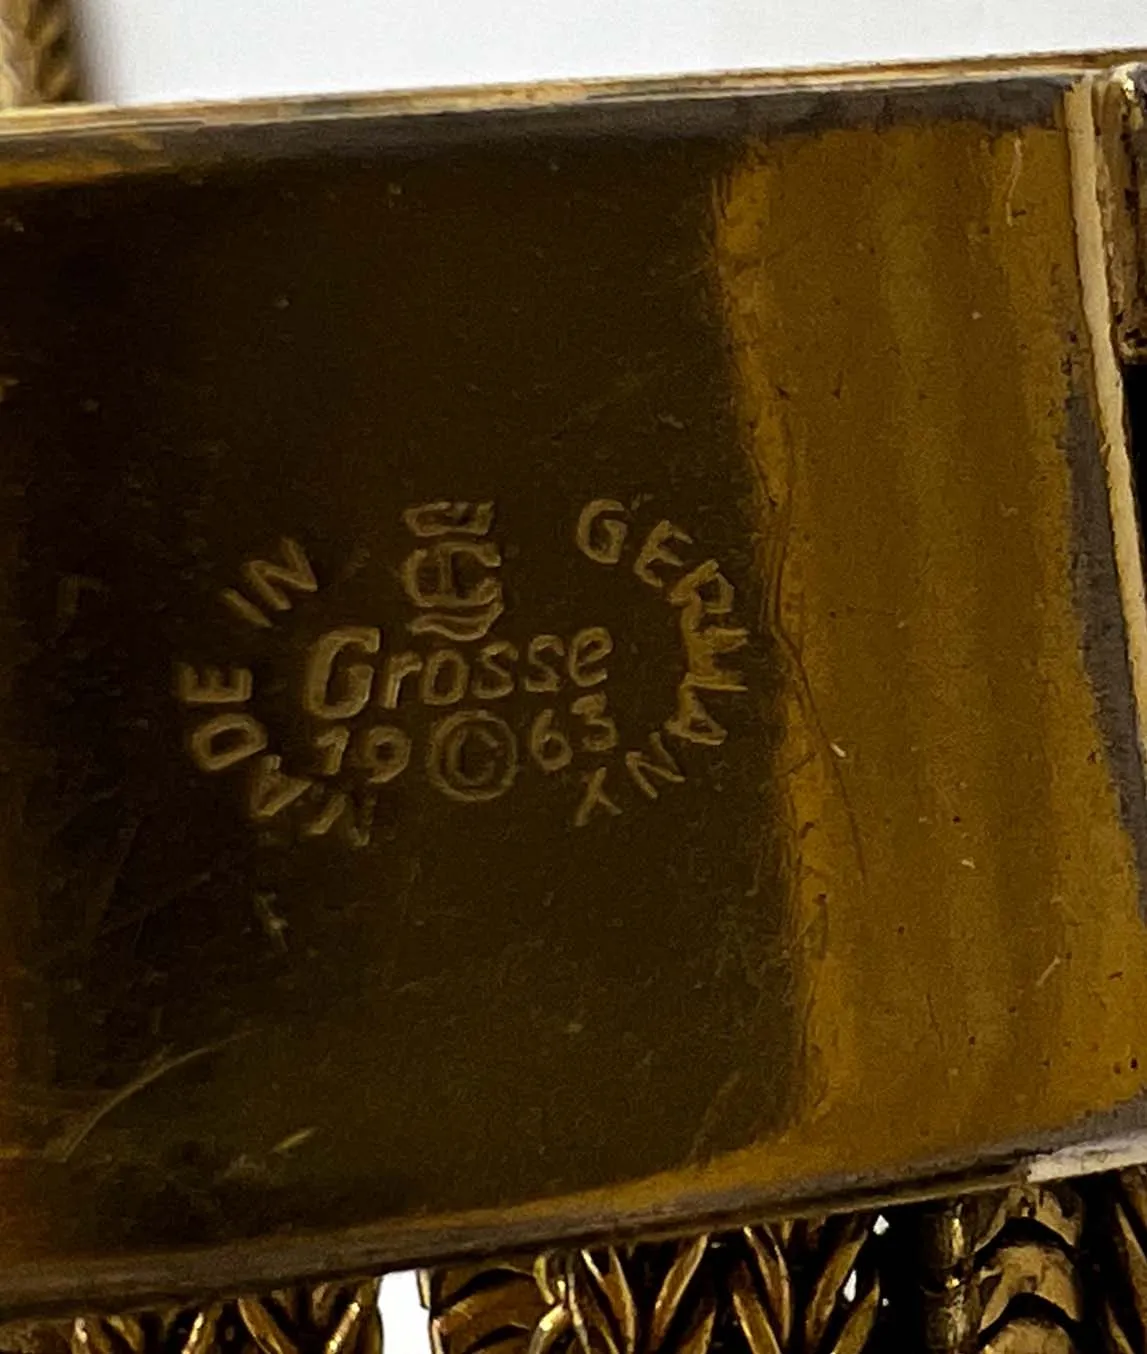 Grosse 1963 stamp